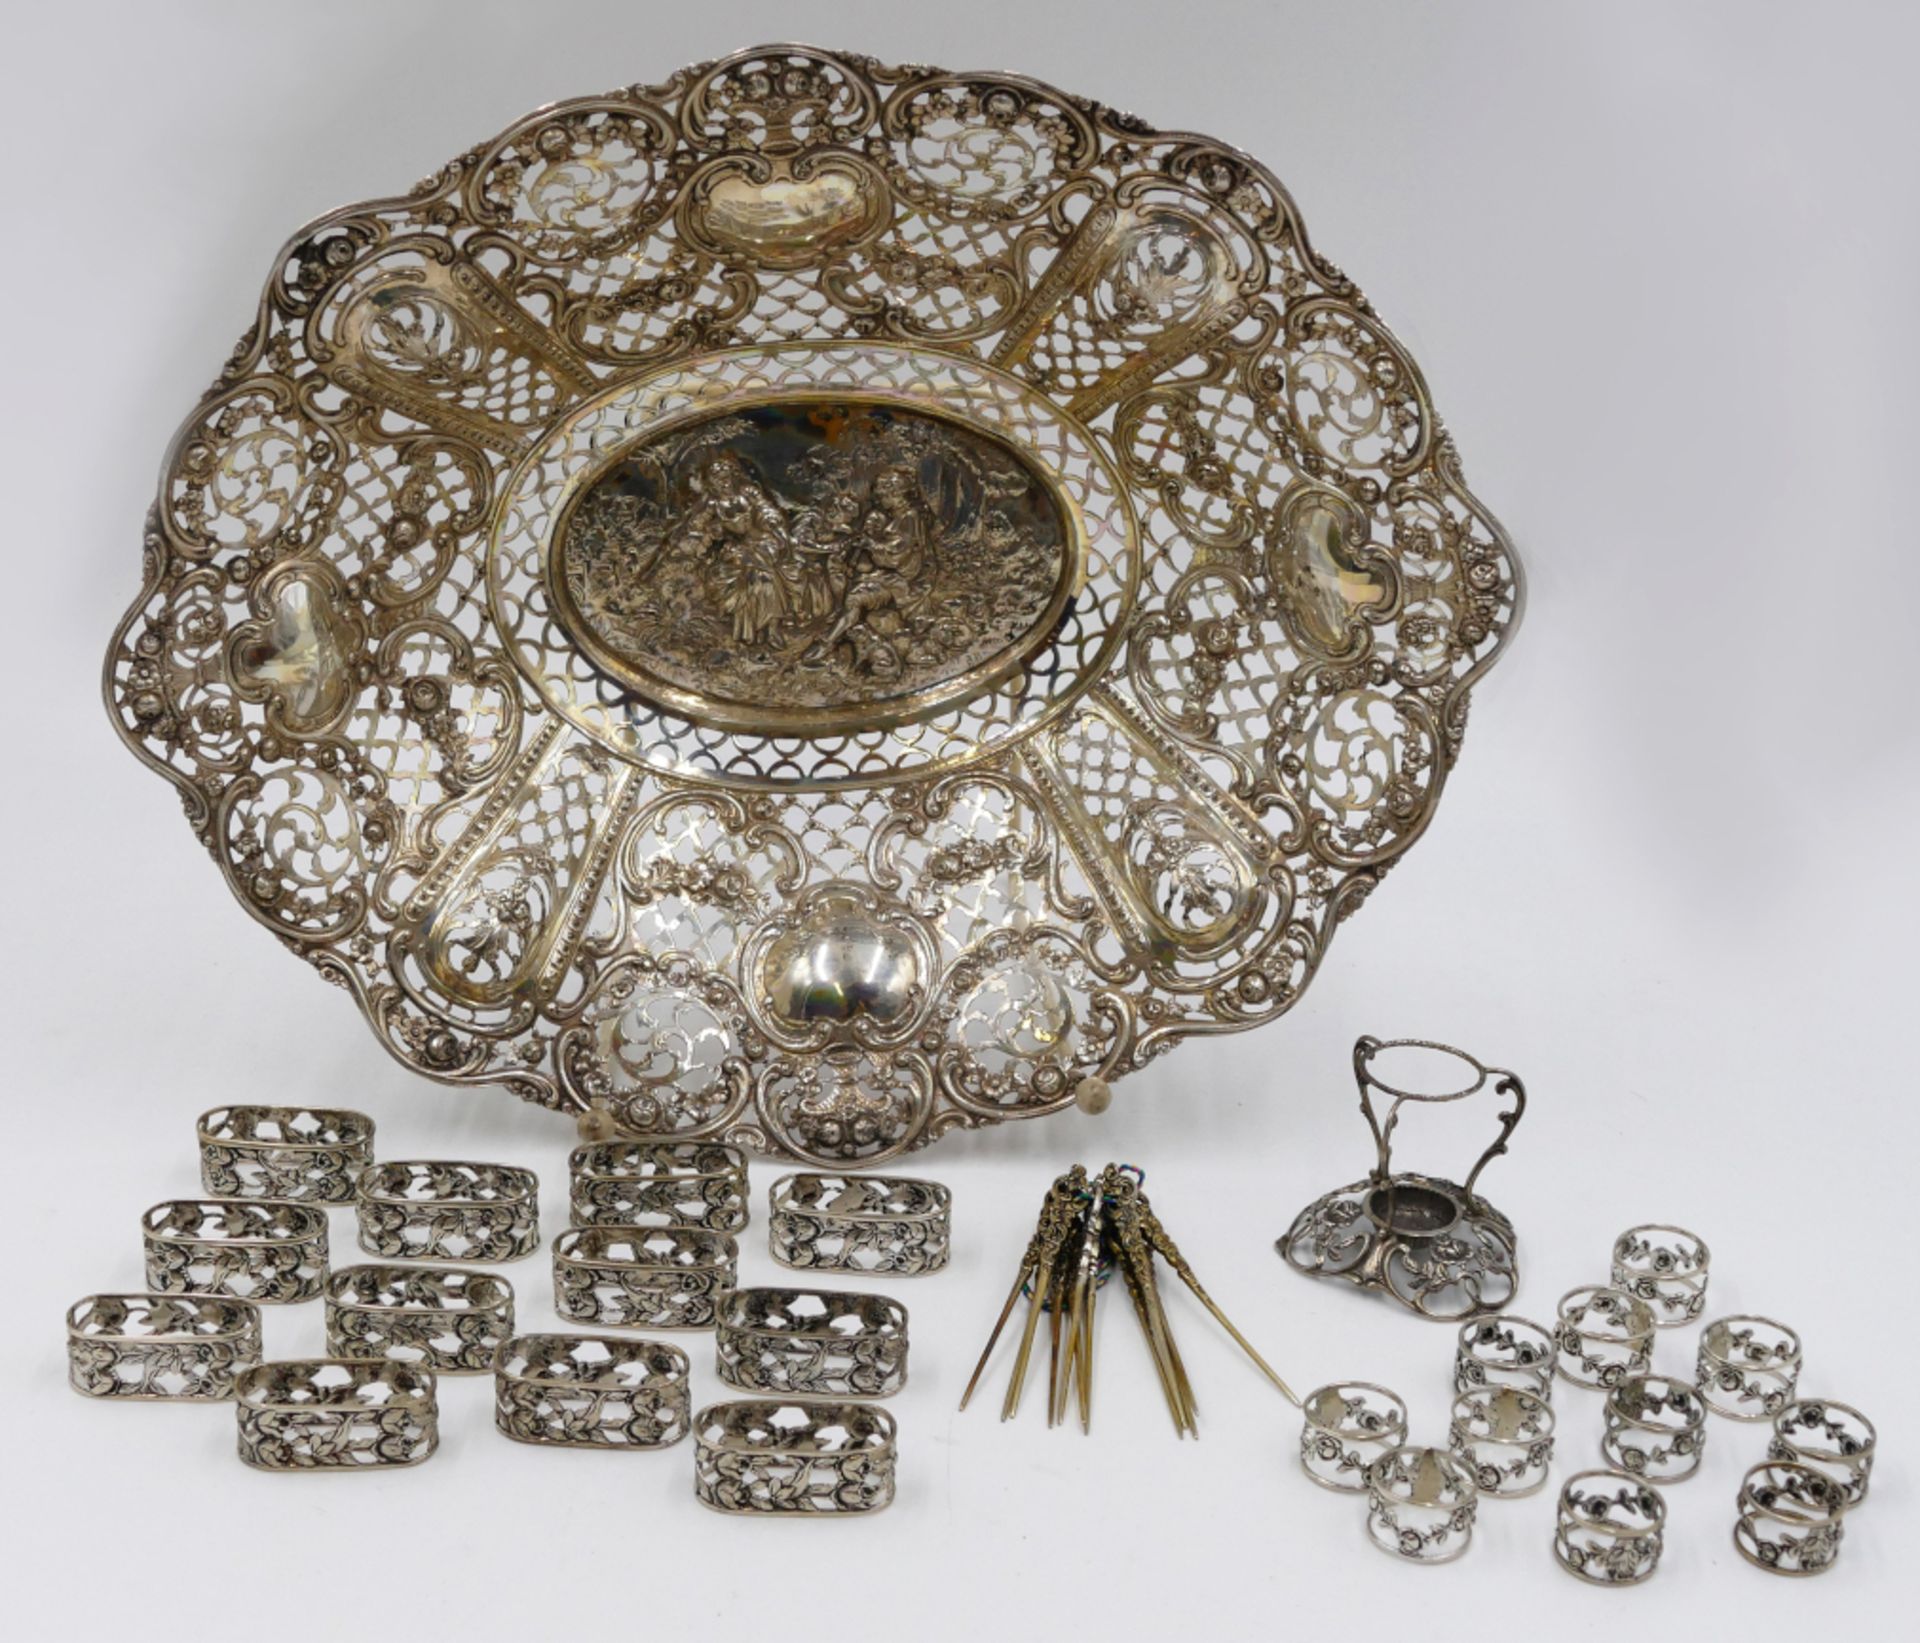 1 Schale Silber 800 (L ca. 35cm, B ca. 29cm, H ca. 7,5cm) sowie Besteckteile, Serviettenhalter u.a.,